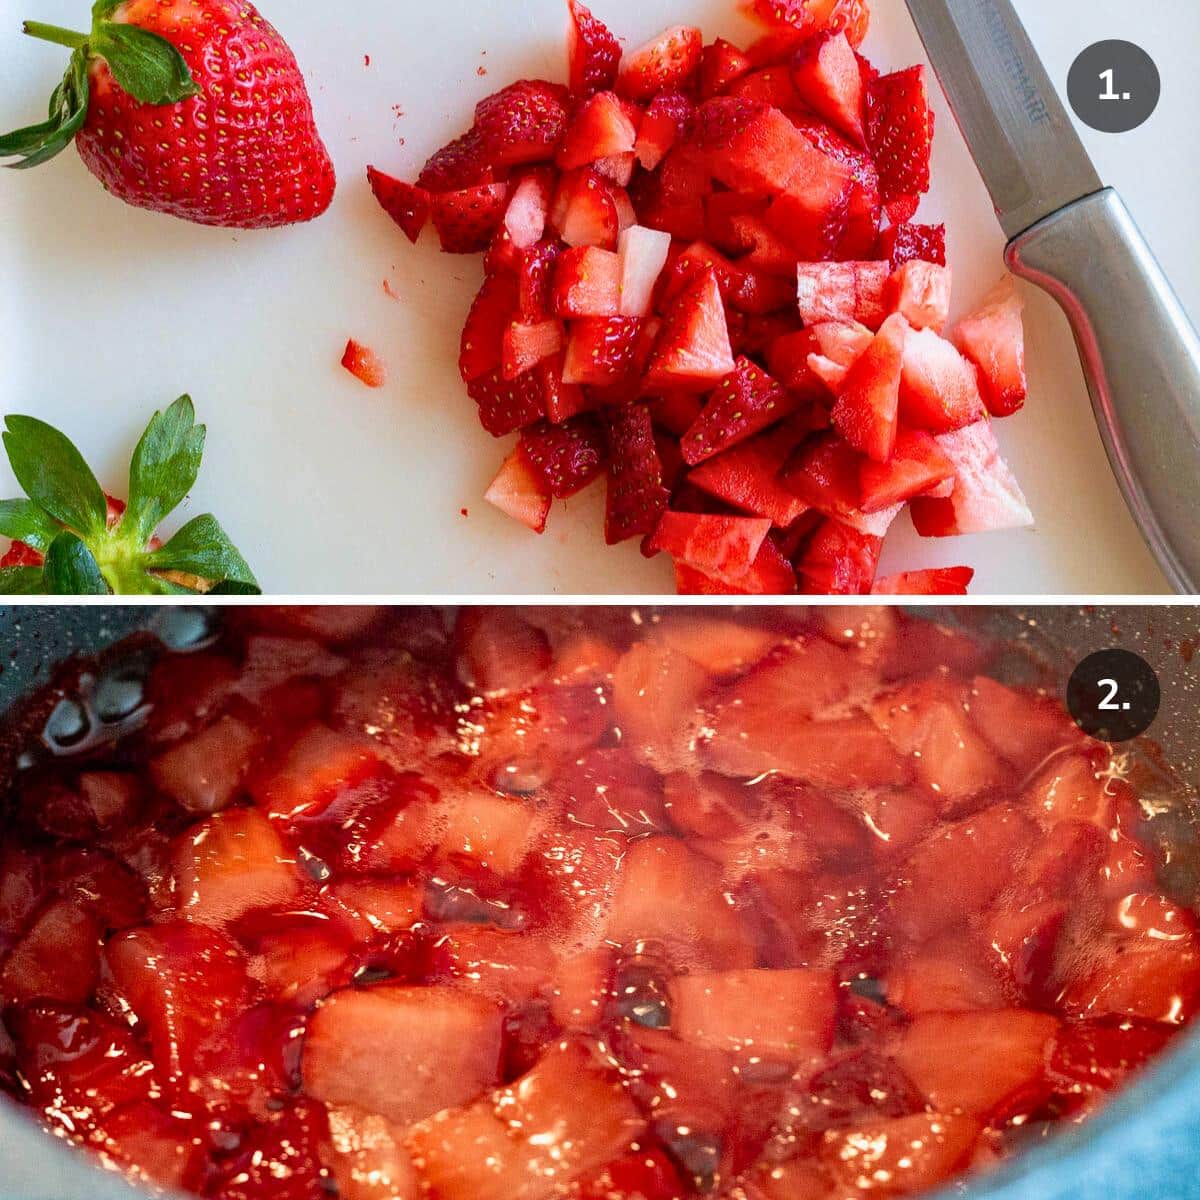 Chopped fresh strawberry cooking on a sauté pan. 